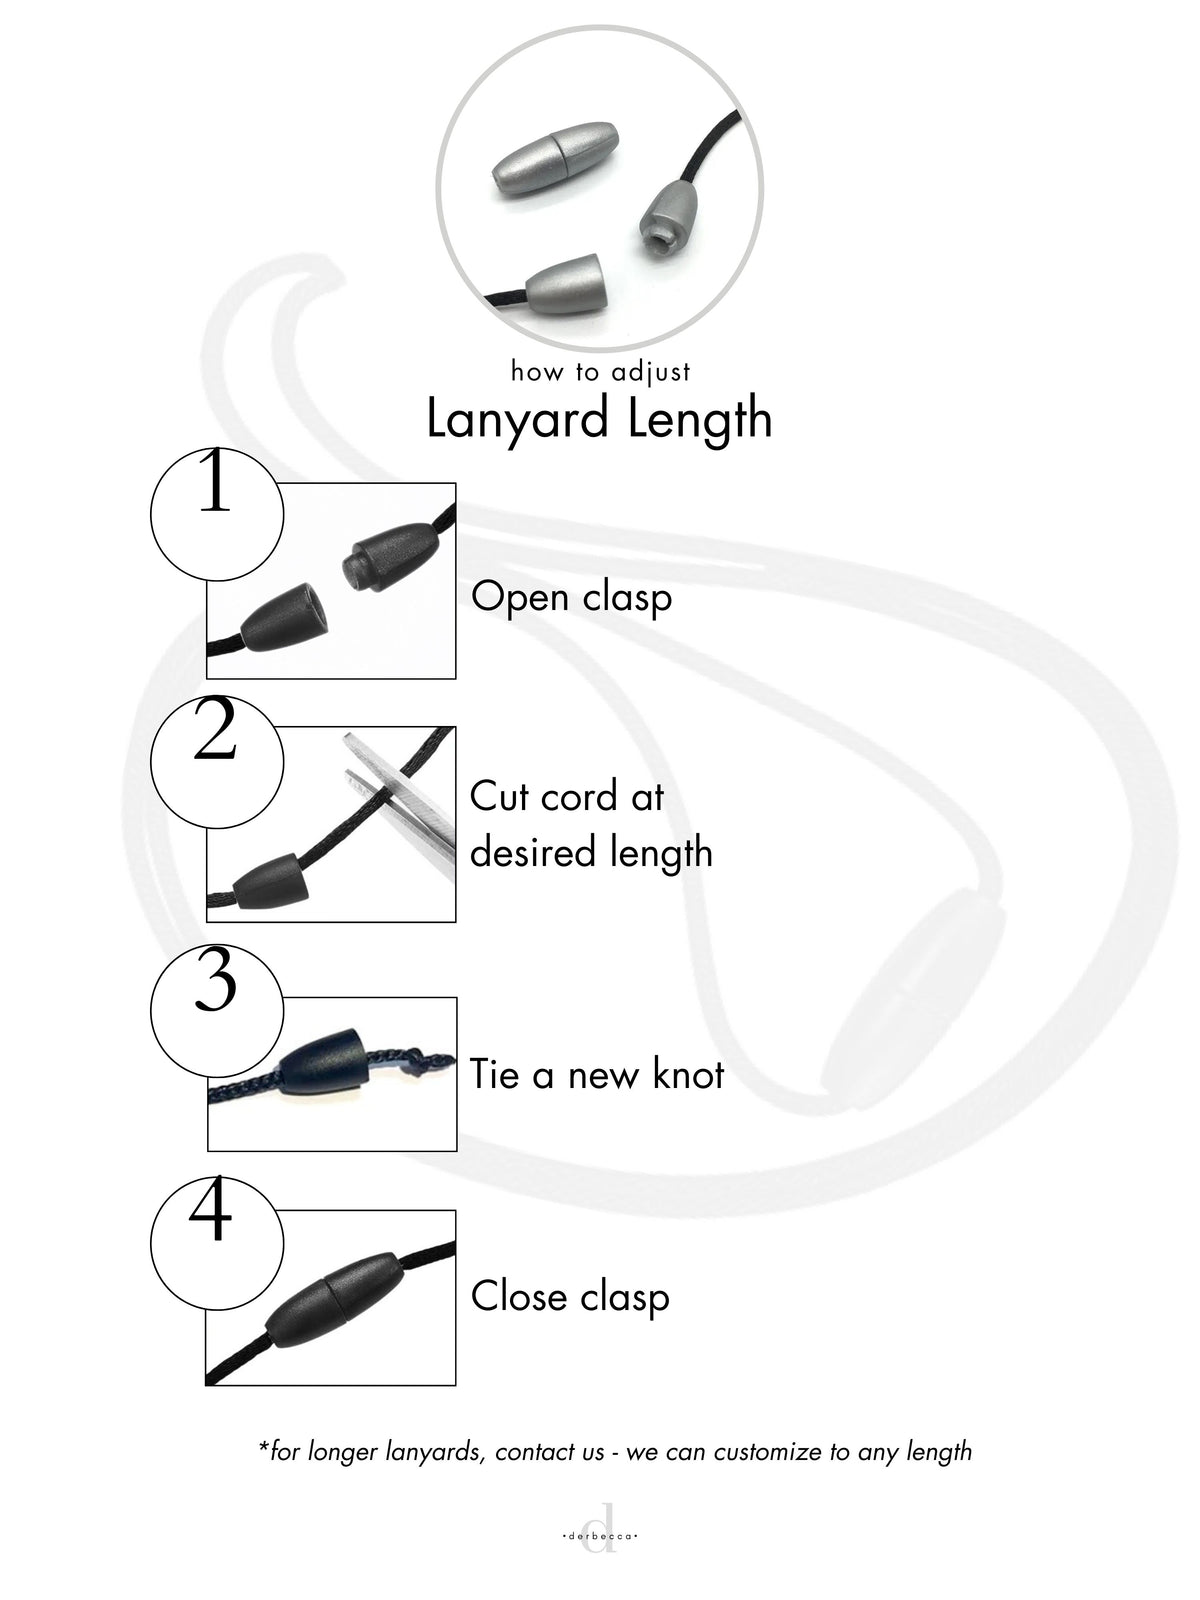 How to Adjust Lanyard Length